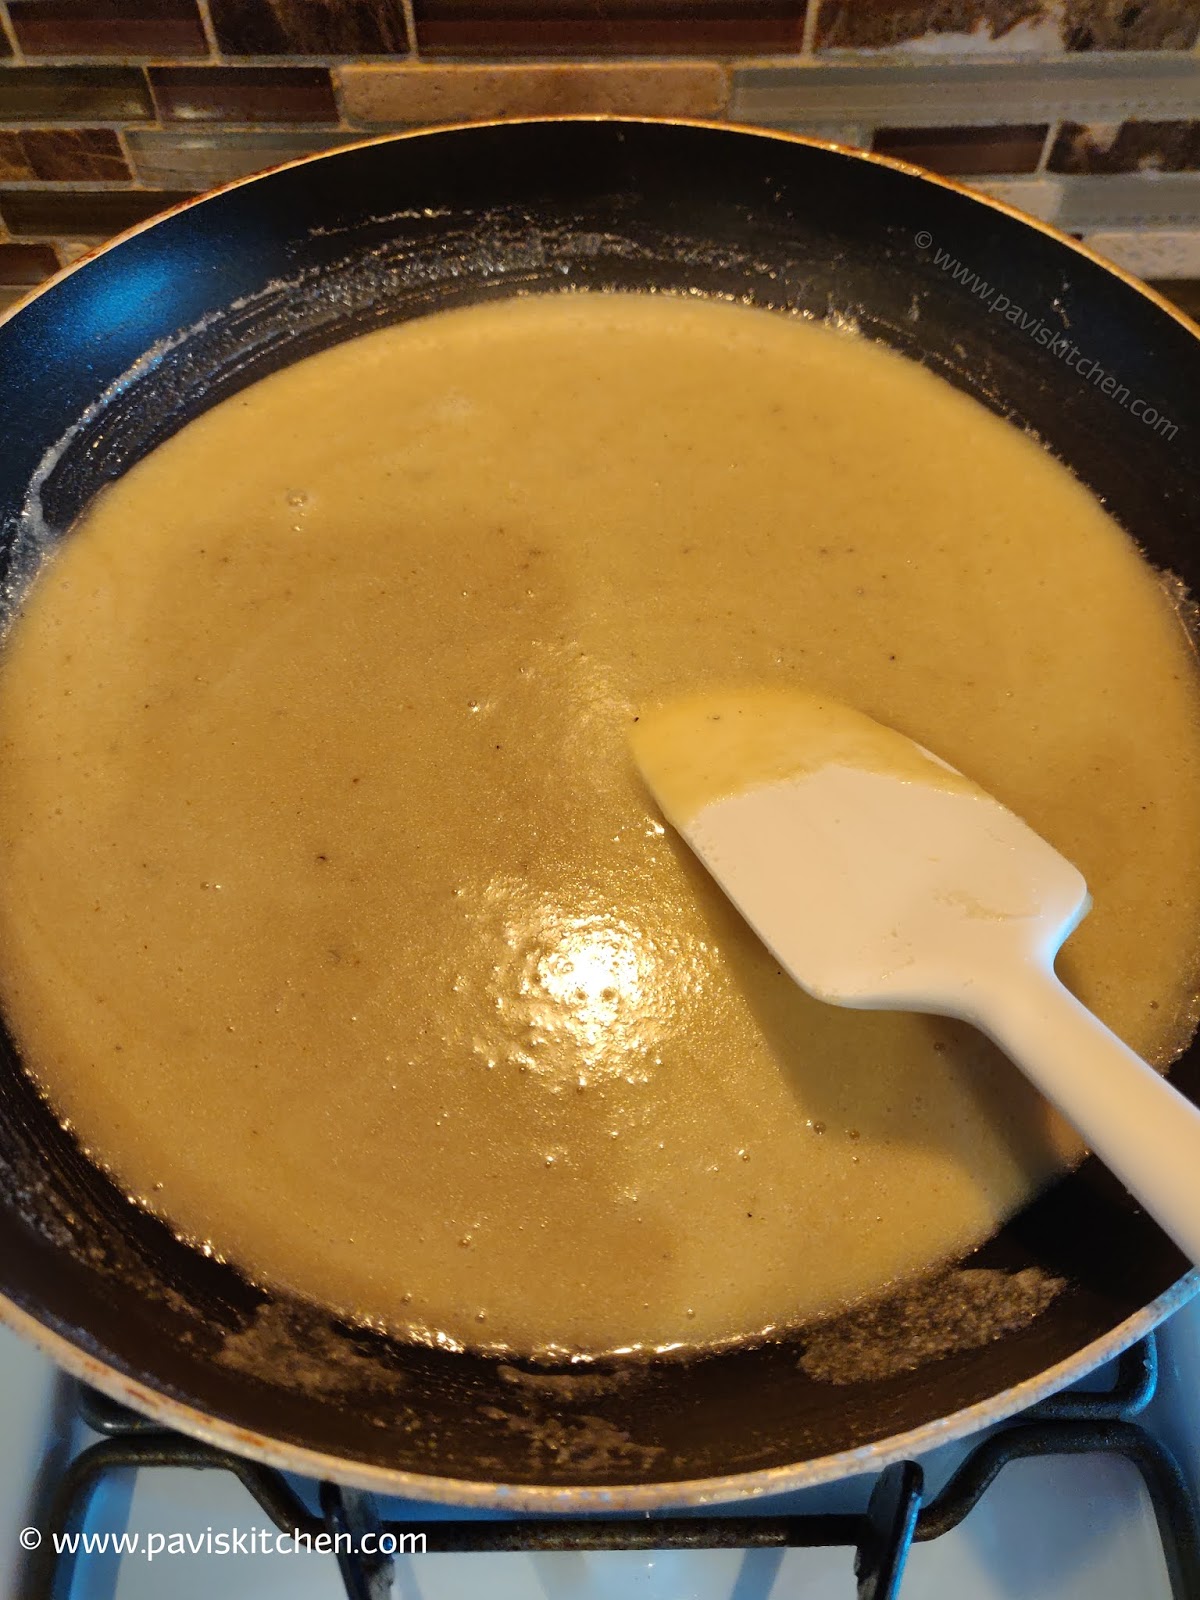 Badam Katli Recipe | Almond Burfi Recipe With Almond Flour